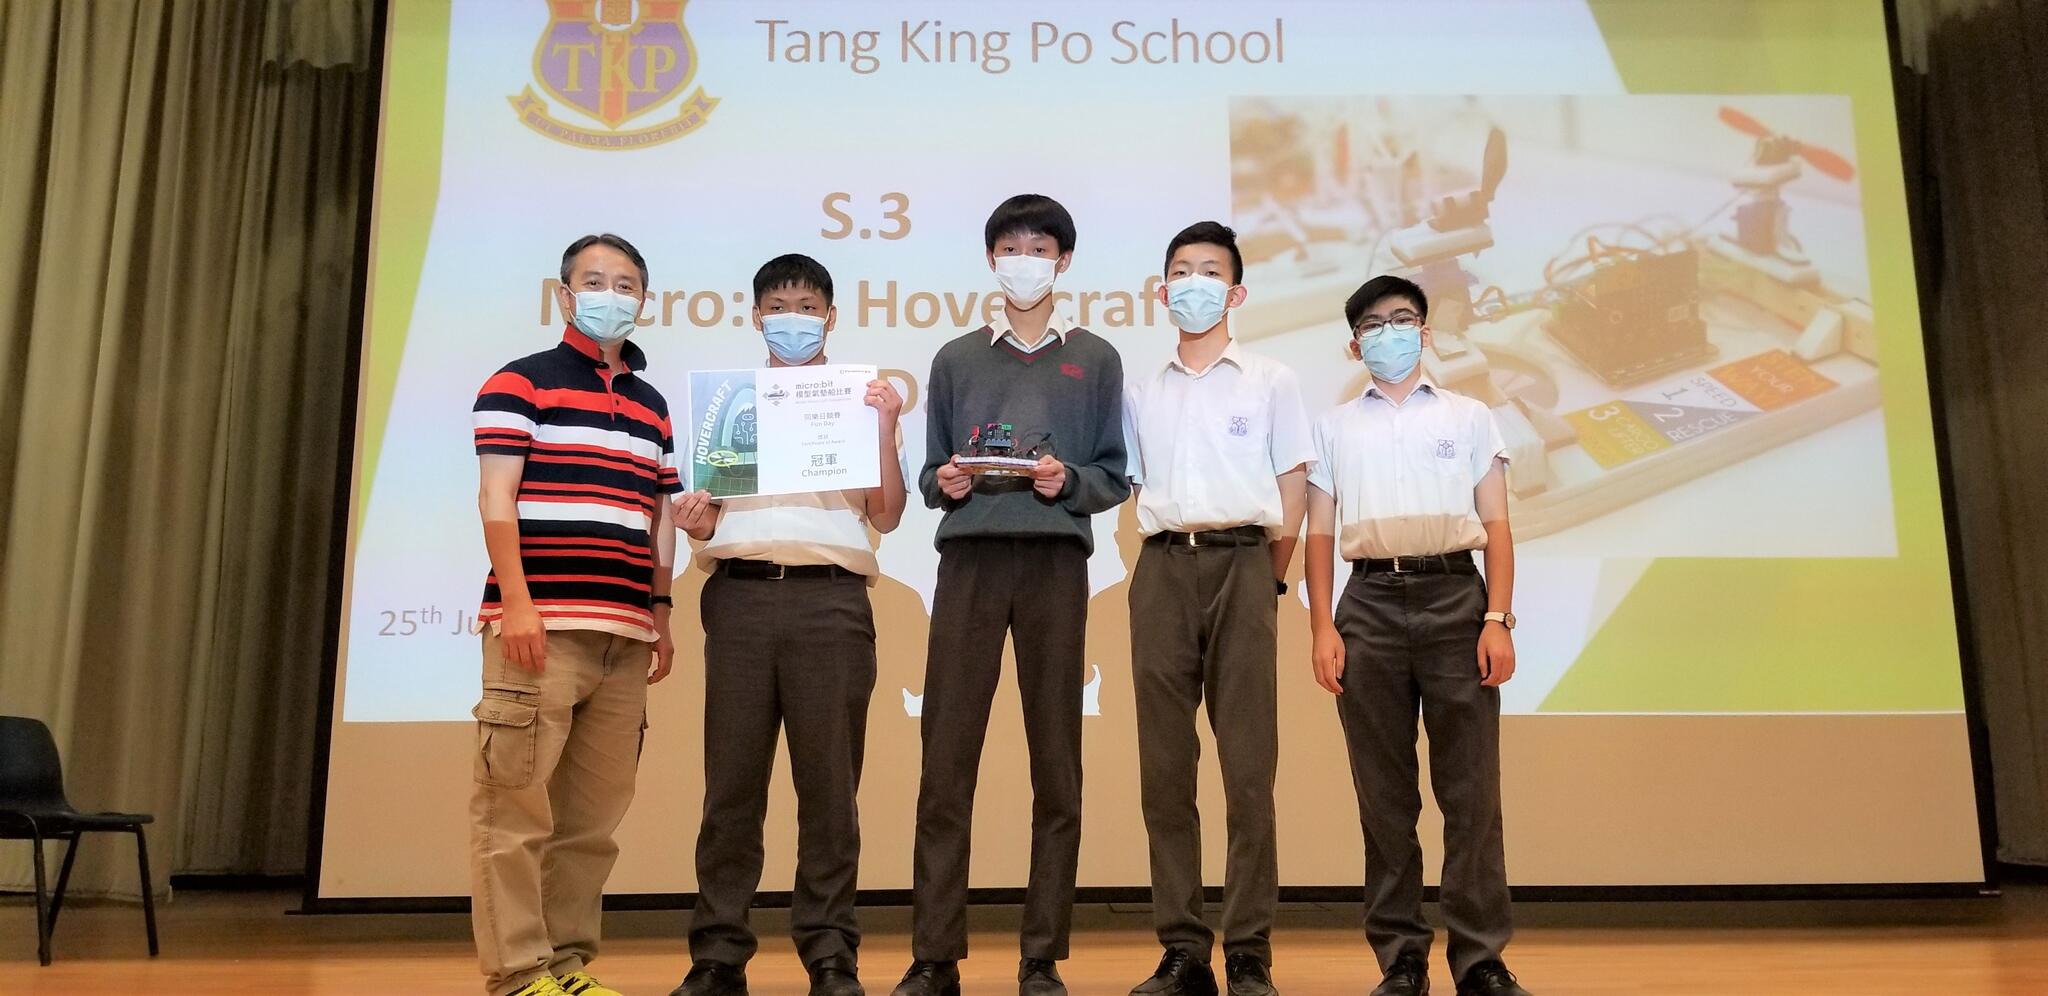 Hovercraft Fun Day - Tang King Po School
